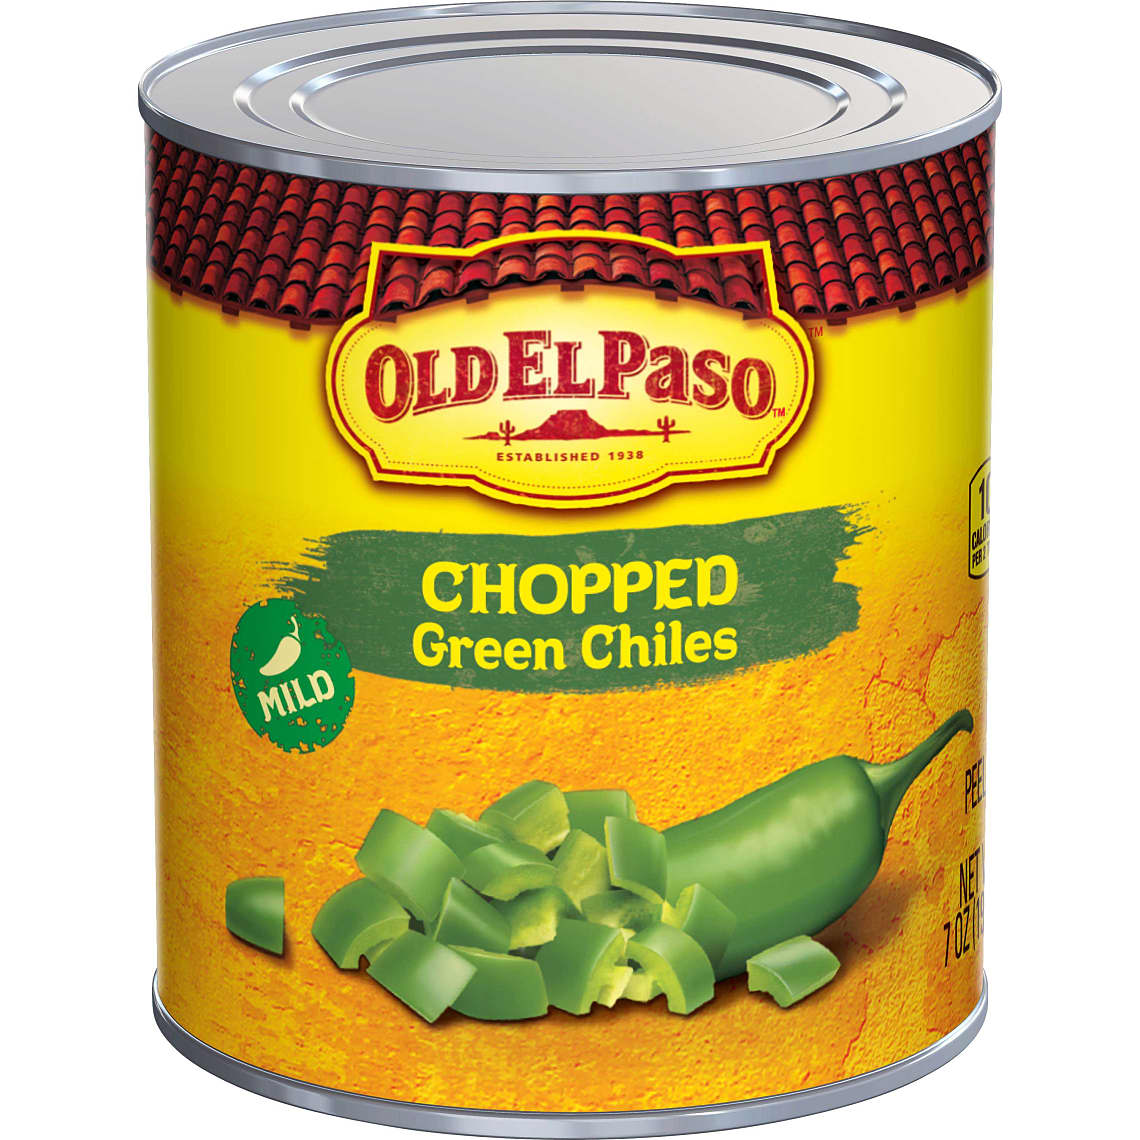 Old El Paso Chopped Green Chiles, 7 oz